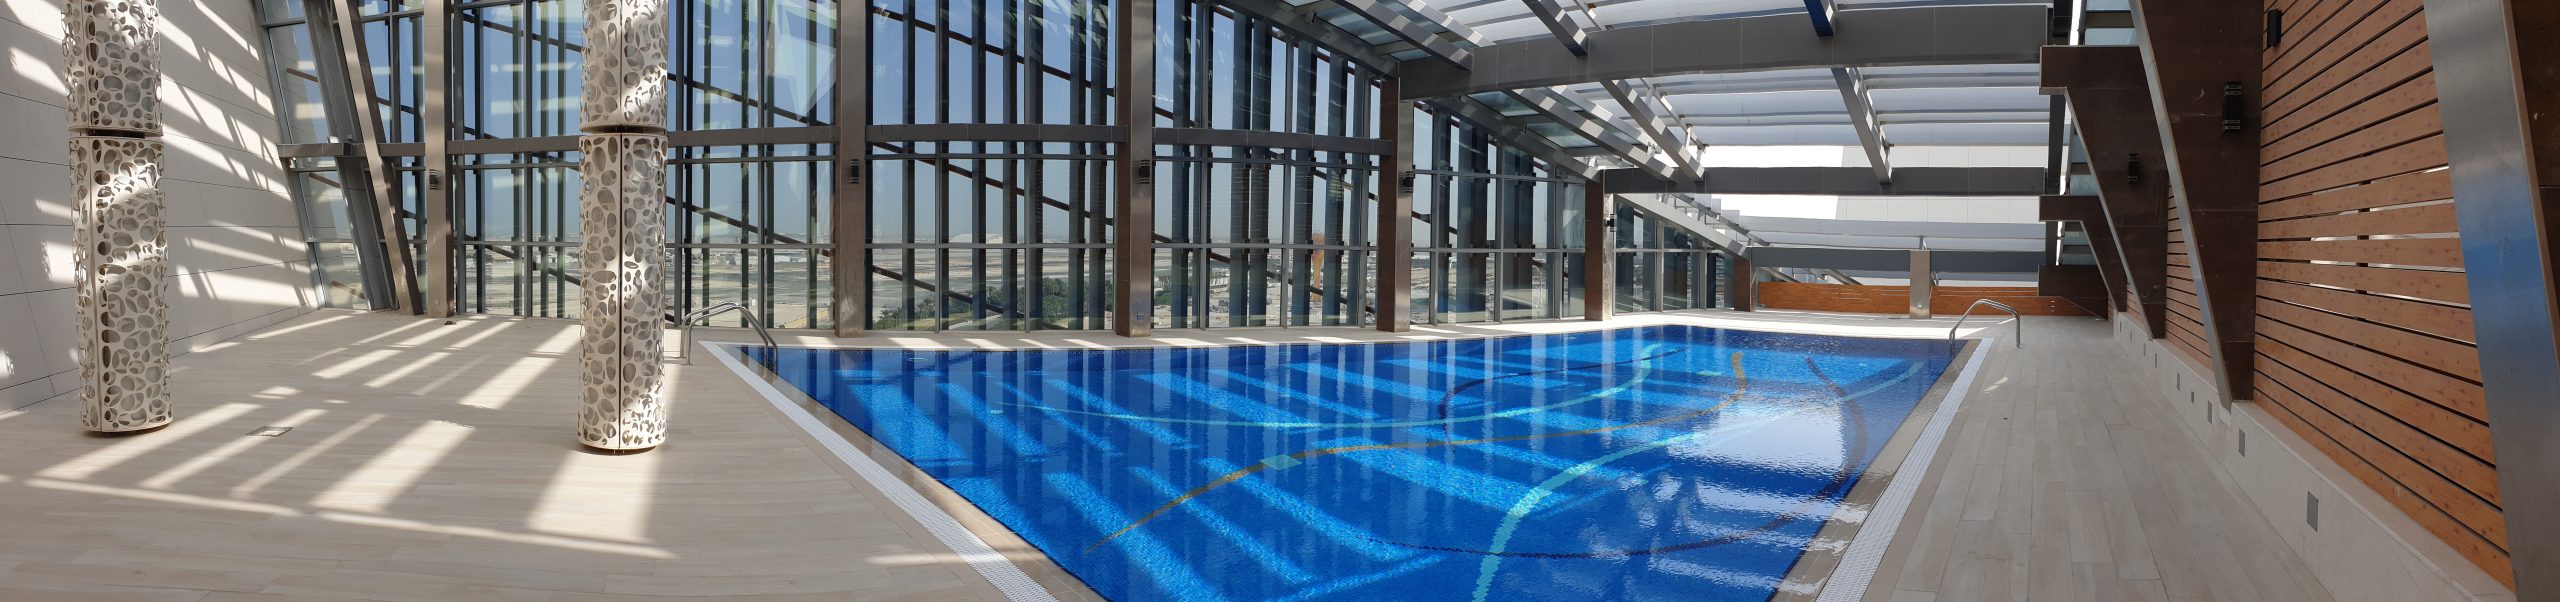 VIP Hotel swimming pool